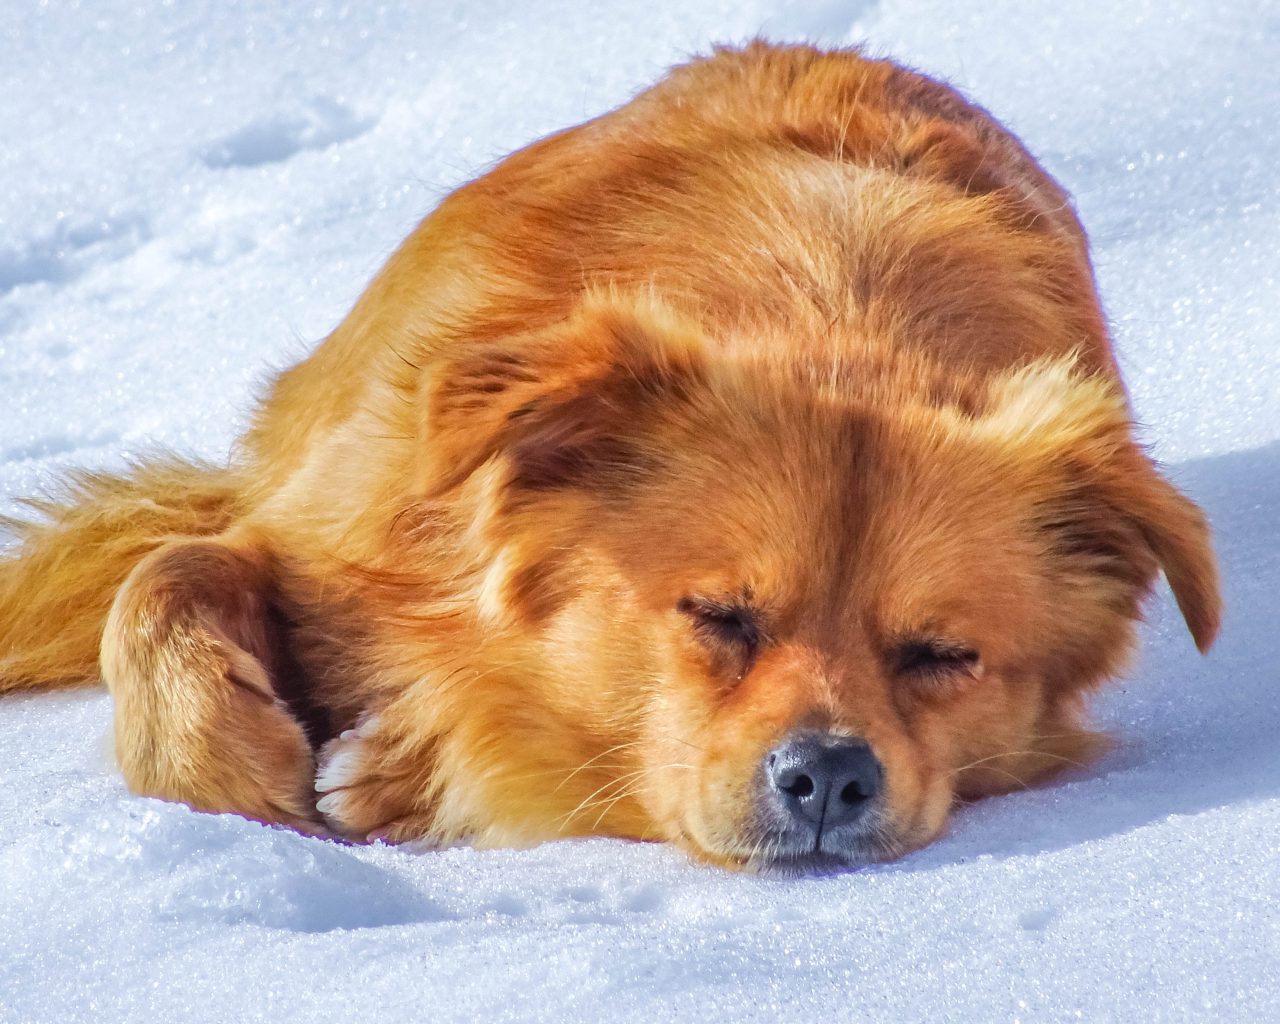 Hond-slaapt-in-sneeuw